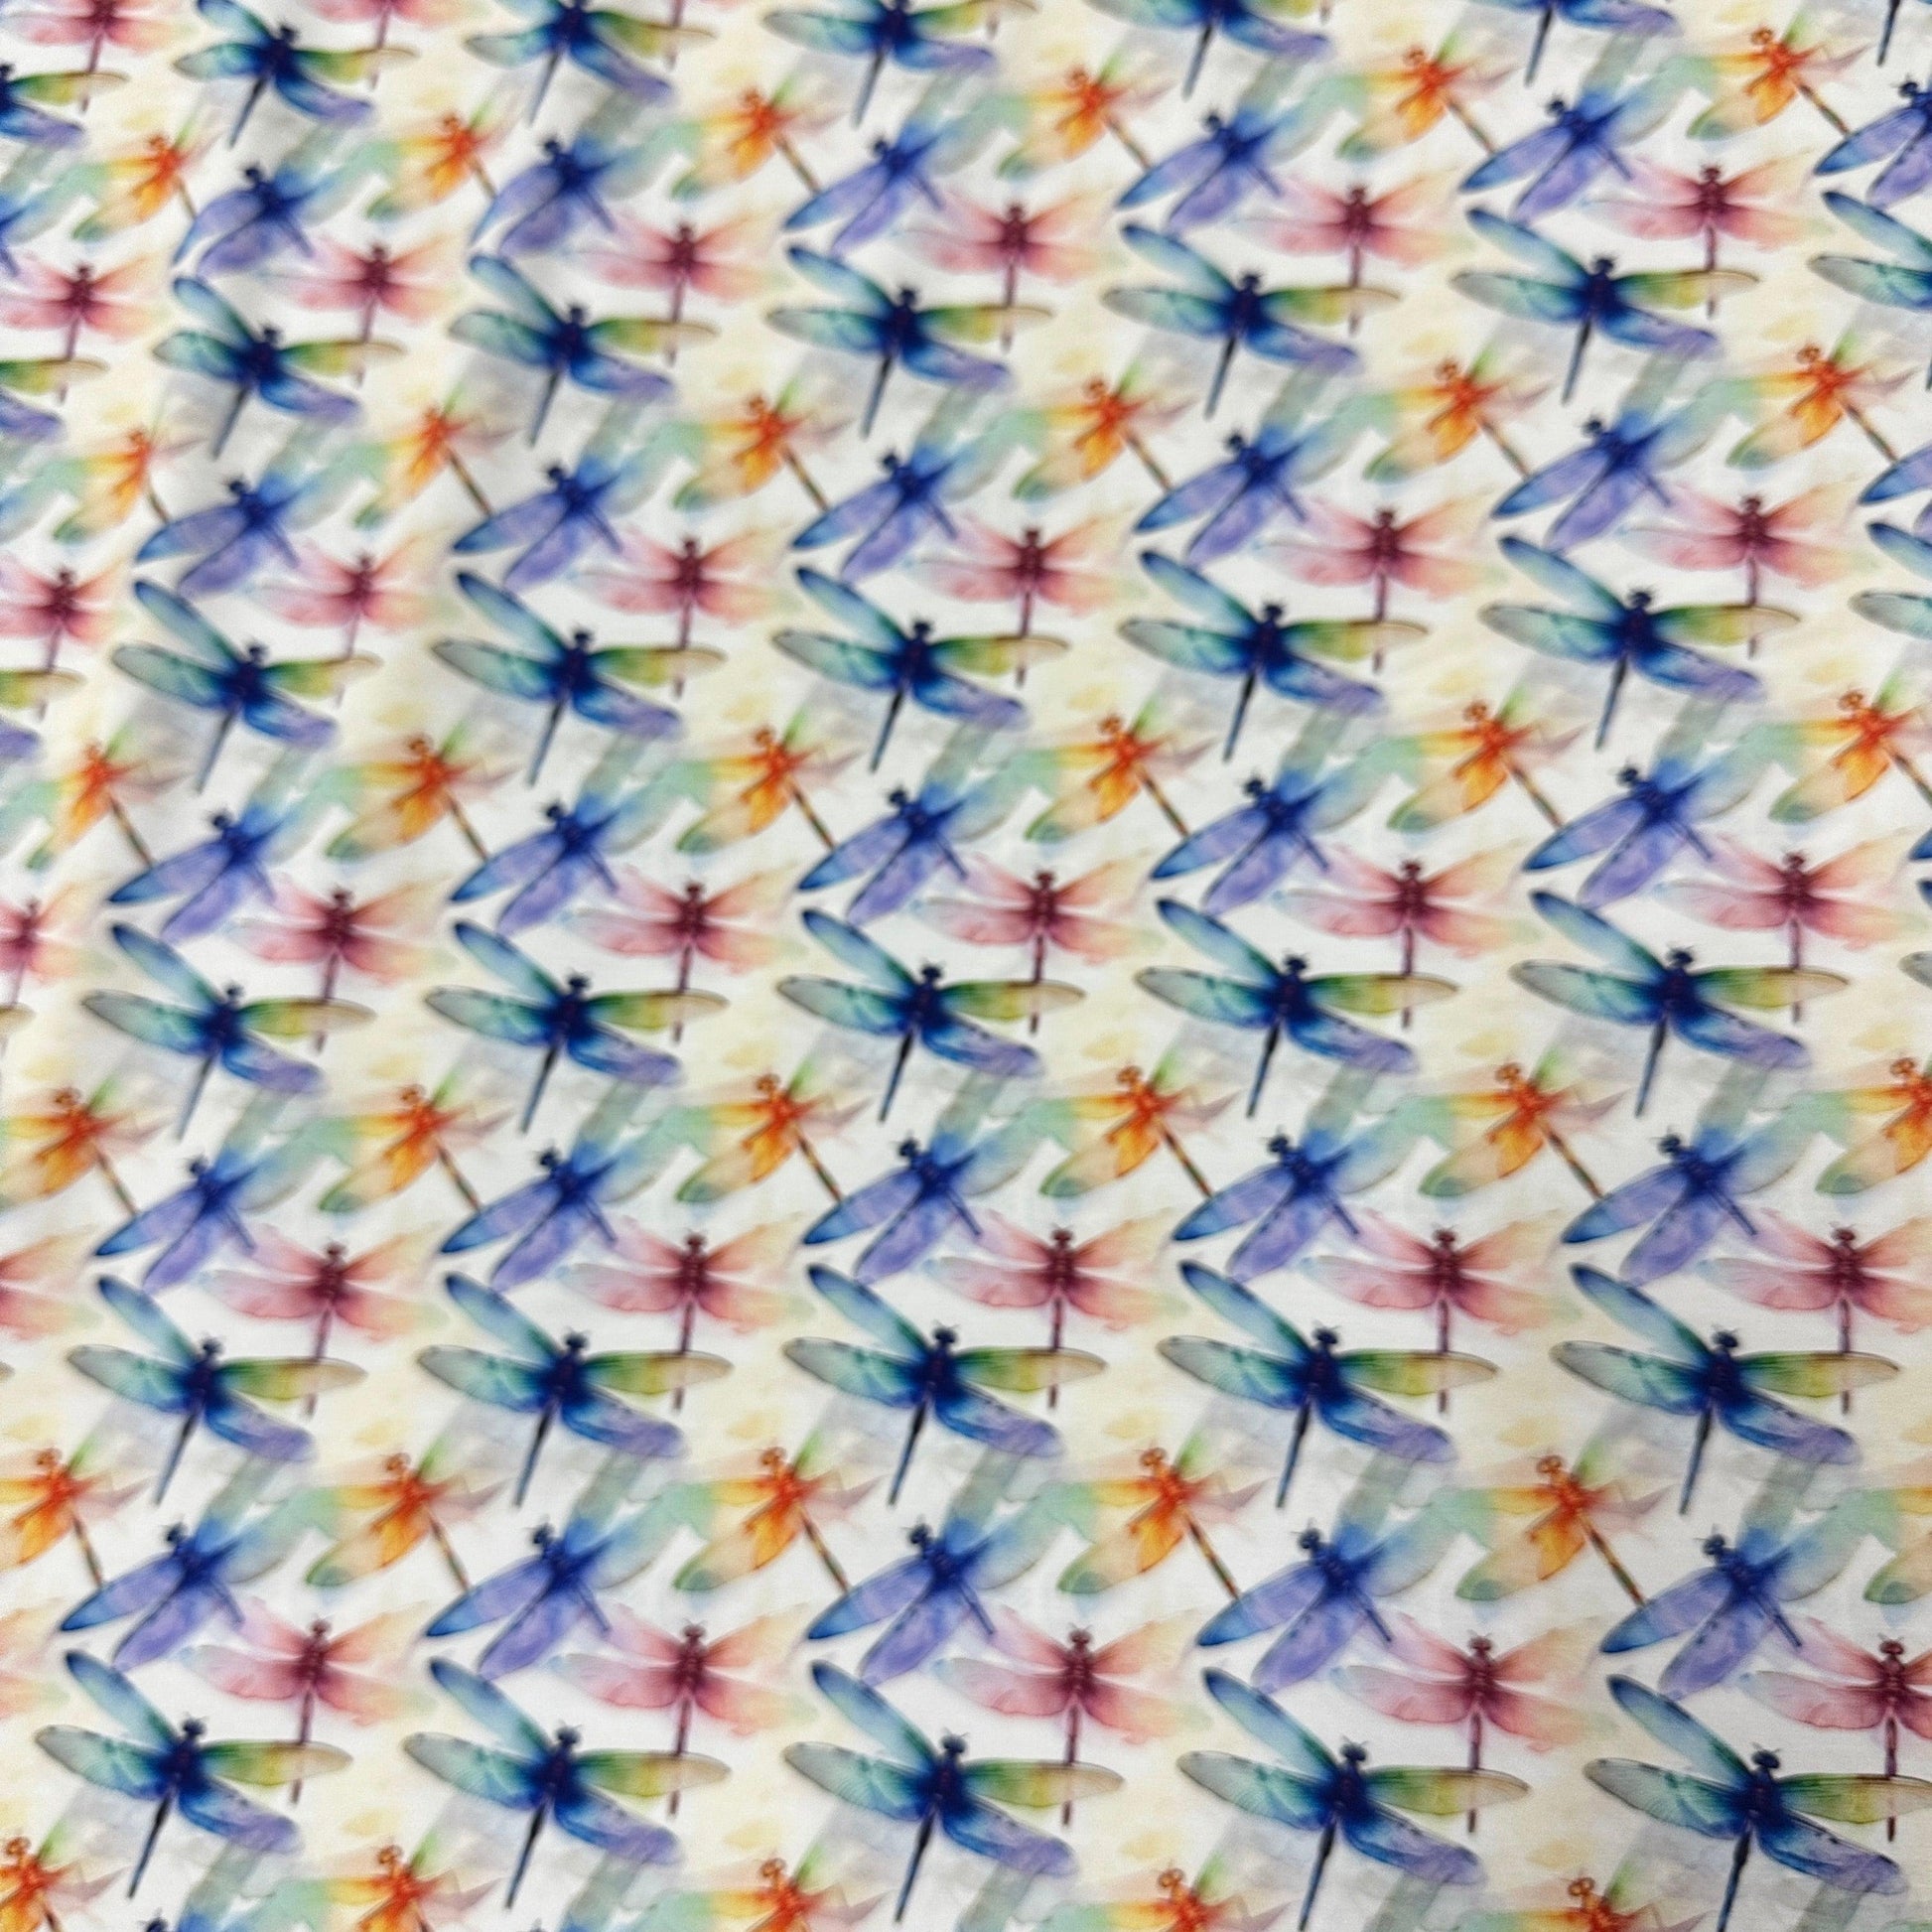 Blue Dragonflies on Organic Cotton/Spandex Jersey Fabric - Nature's Fabrics